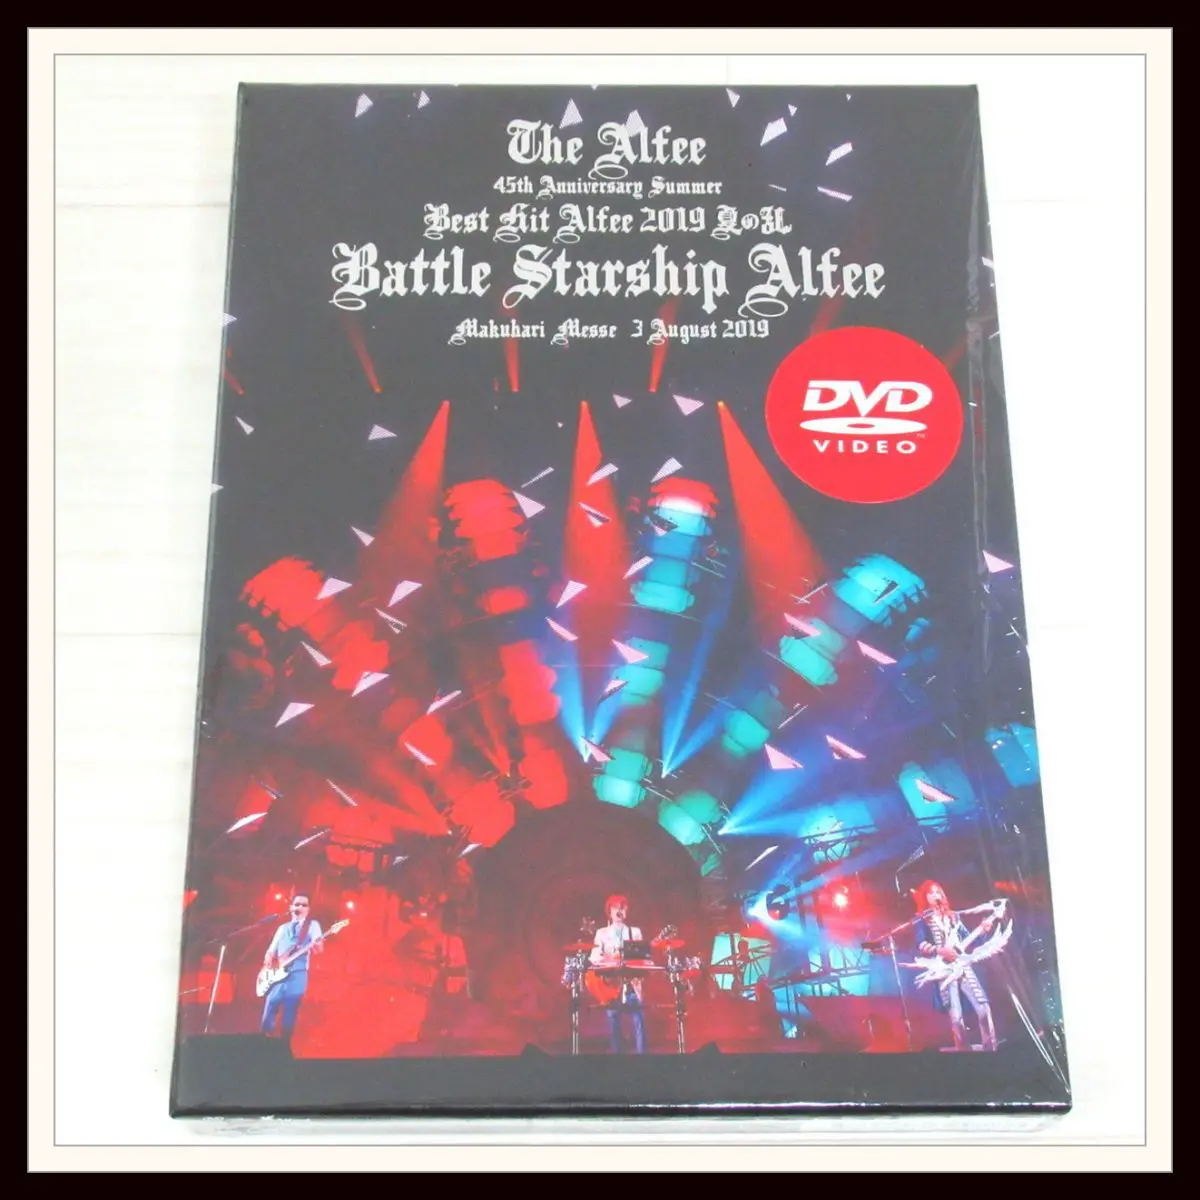 THE ALFEE 45th Anniversary Summer Best Hit Alfee 2019 夏の乱 Battle Starship Alfee Makuhari Messe 2019 DVD 